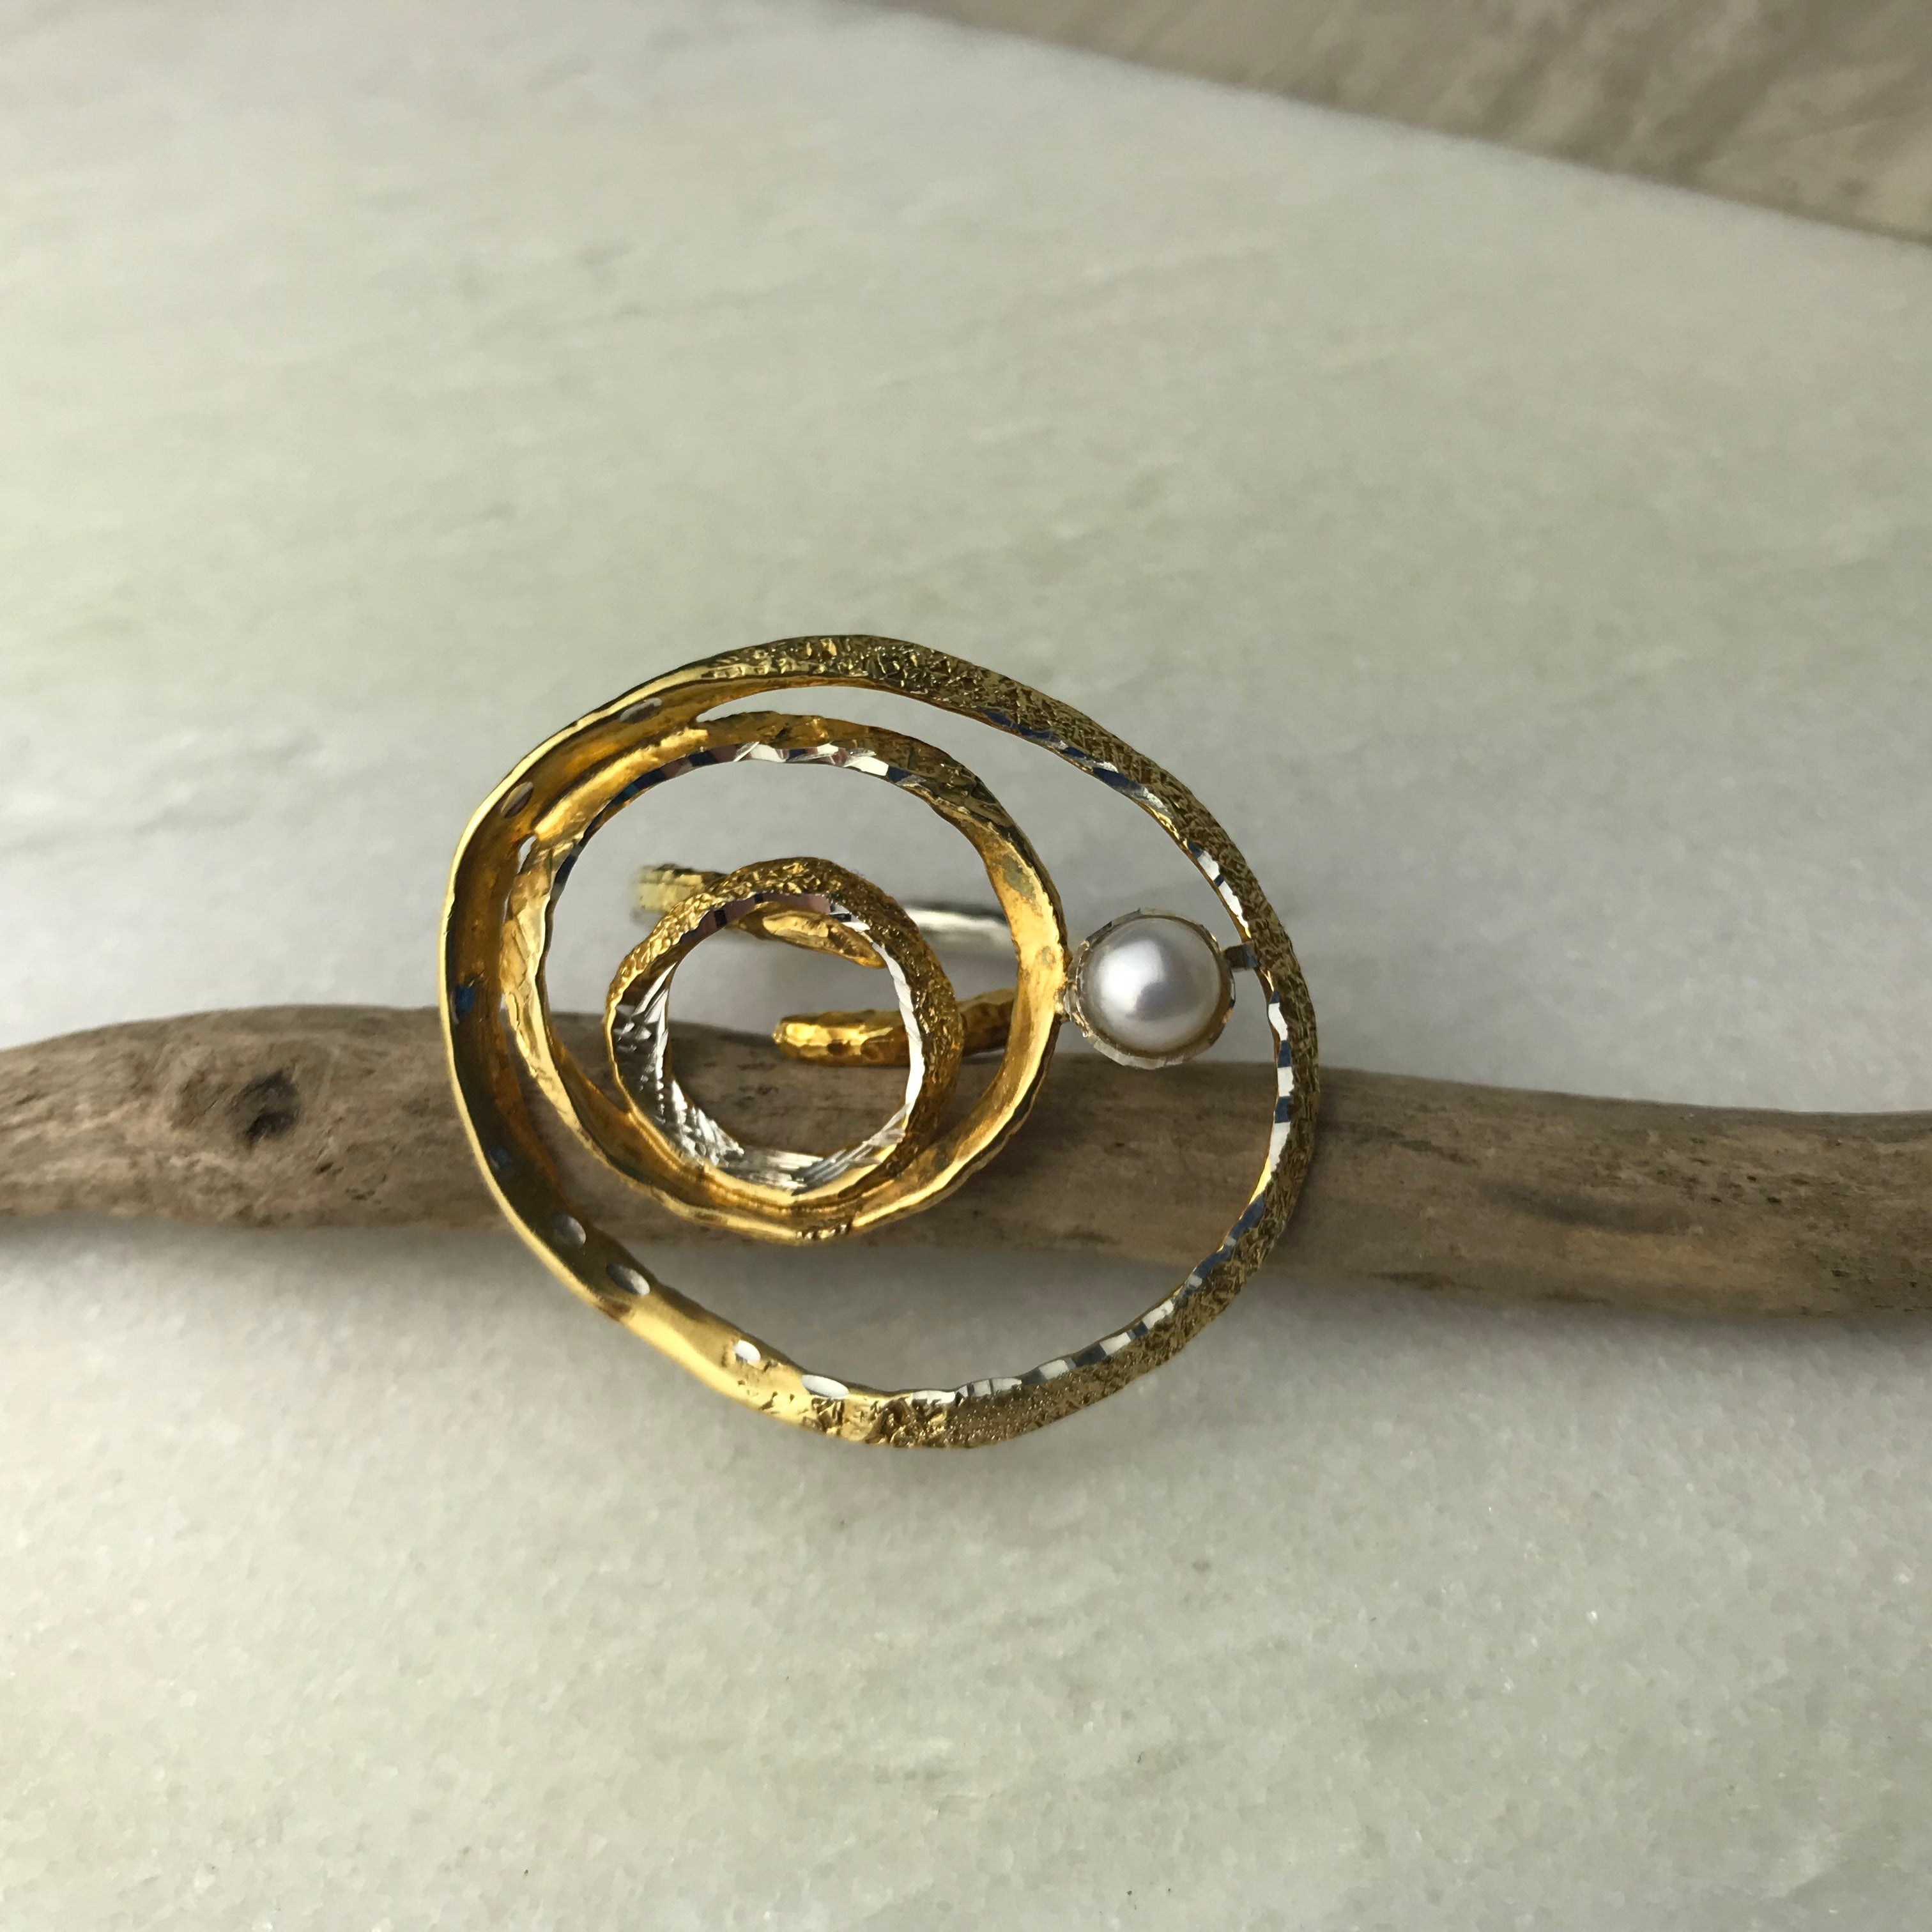 Pearl Swirl Ring - The Nancy Smillie Shop - Art, Jewellery & Designer Gifts Glasgow